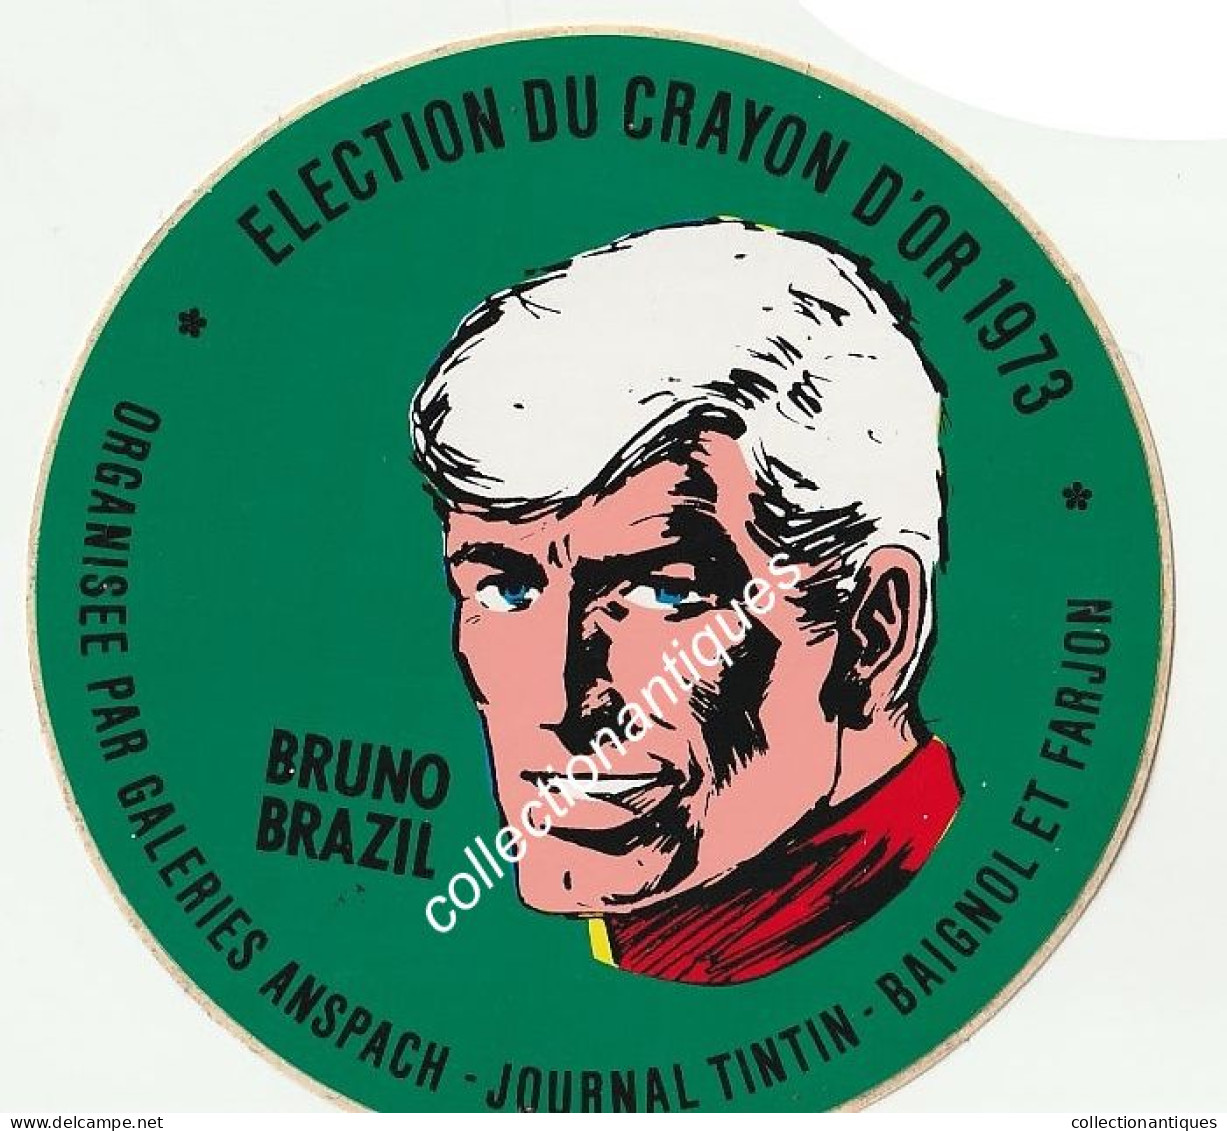 Bruno Brazil RARE Sticker Autocollant Election Du Crayon D'Or 1973 Galeries Anspach Journal Tintin Baignol Et Farjon - Adesivi